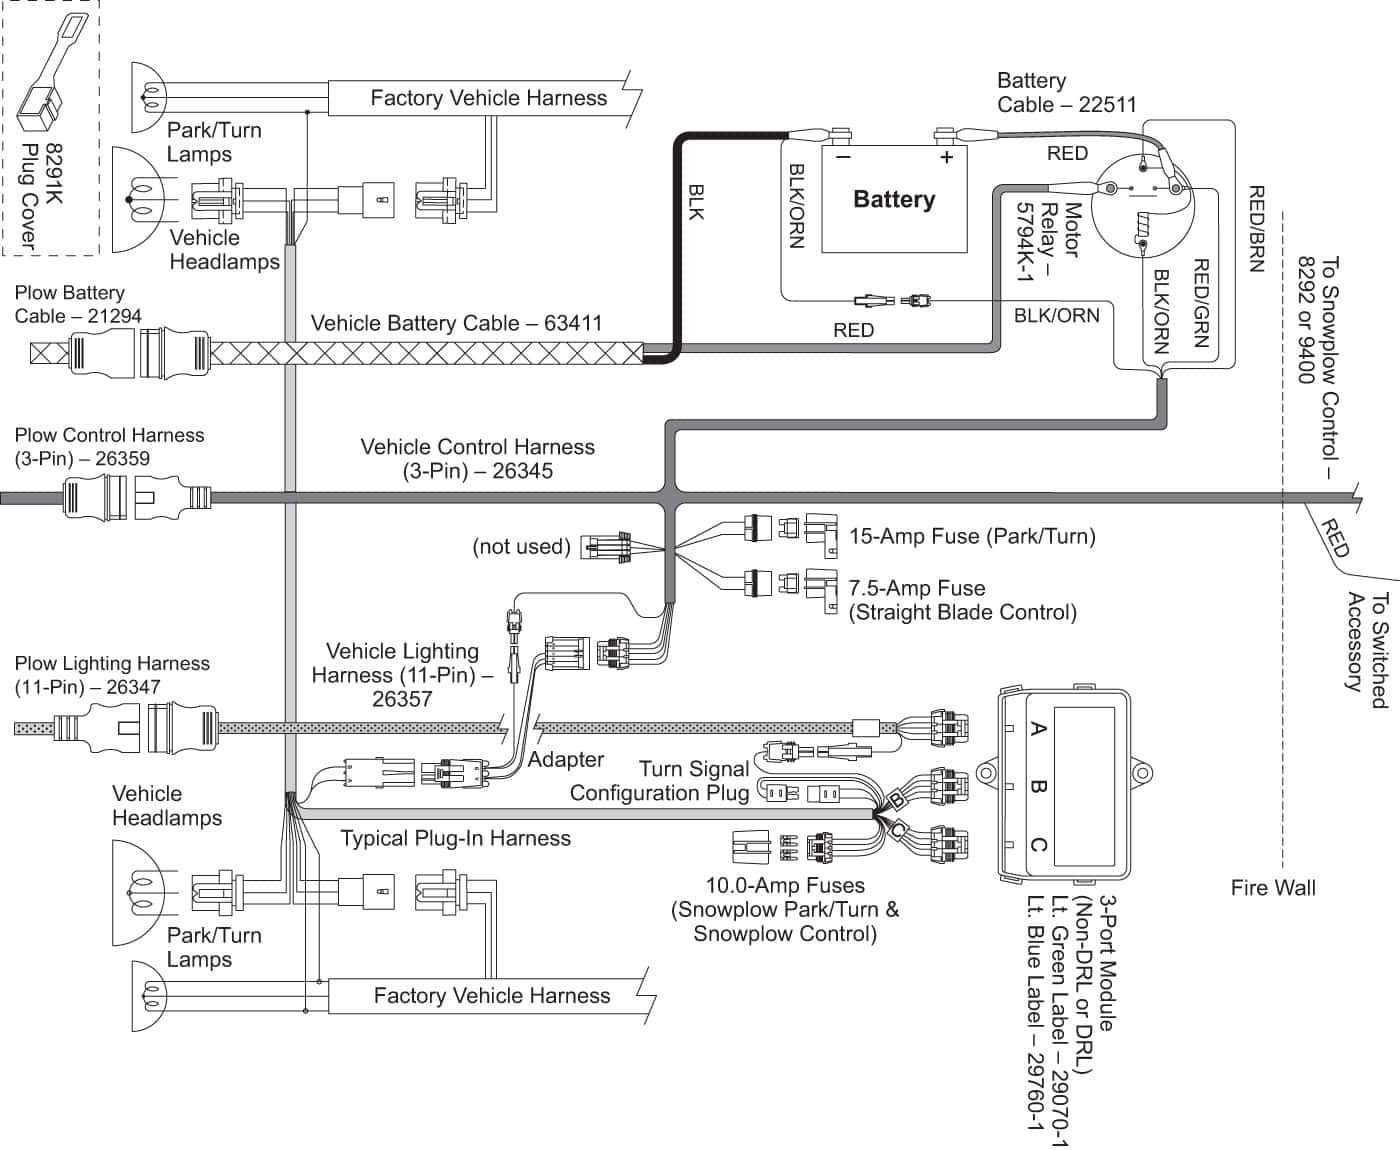 Western Unimount Control Wiring Diagram | Wiring Library - Western Snowplow Wiring Diagram